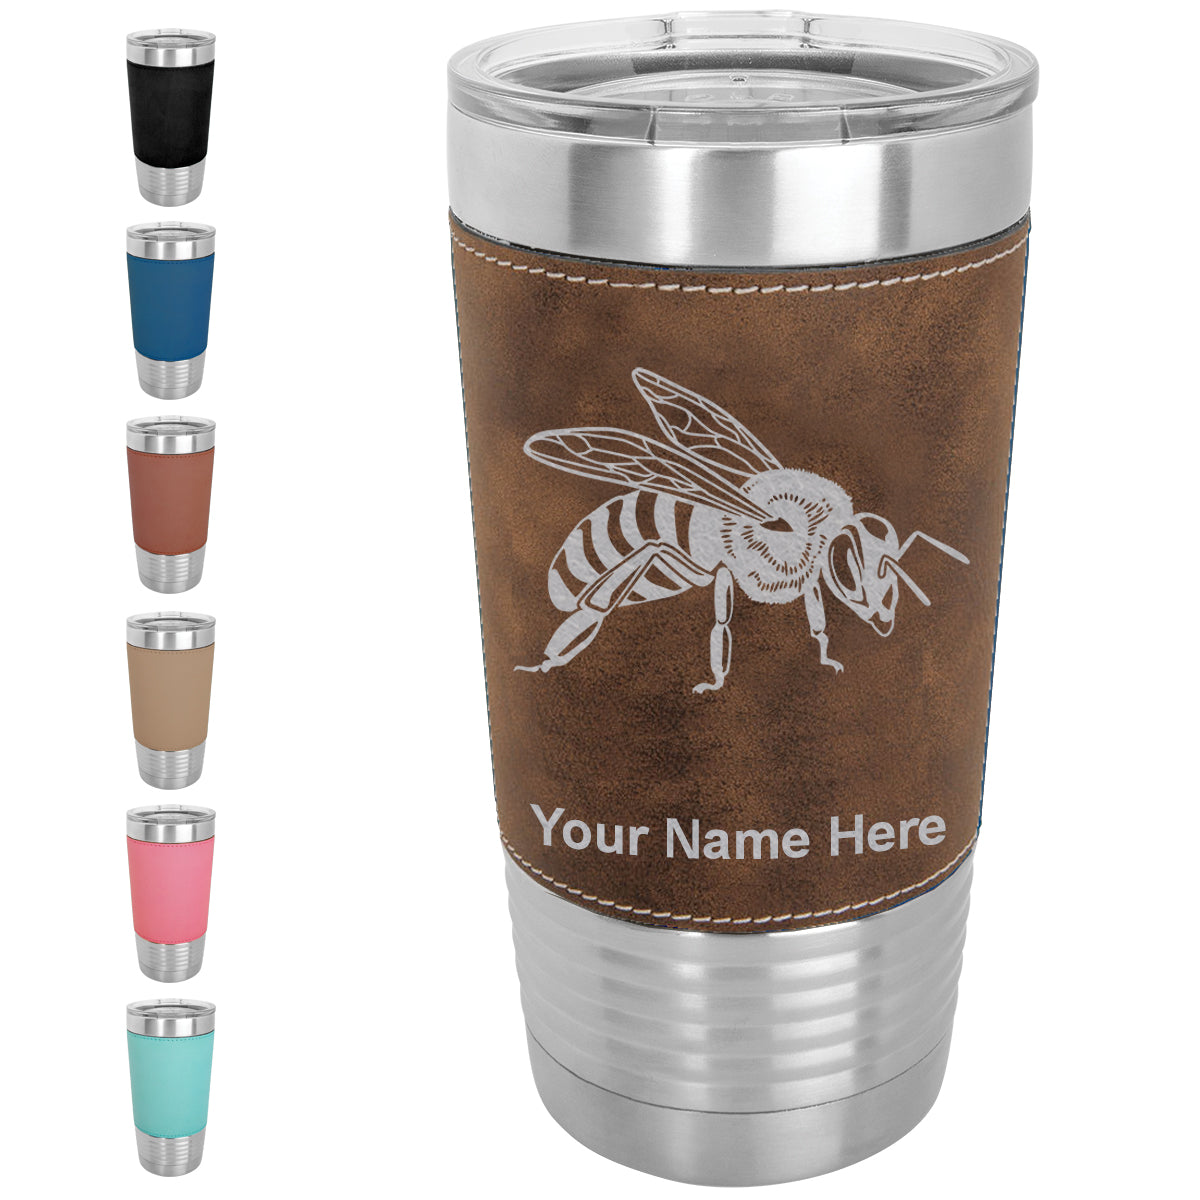 20oz Faux Leather Tumbler Mug, Honey Bee, Personalized Engraving Included - LaserGram Custom Engraved Gifts